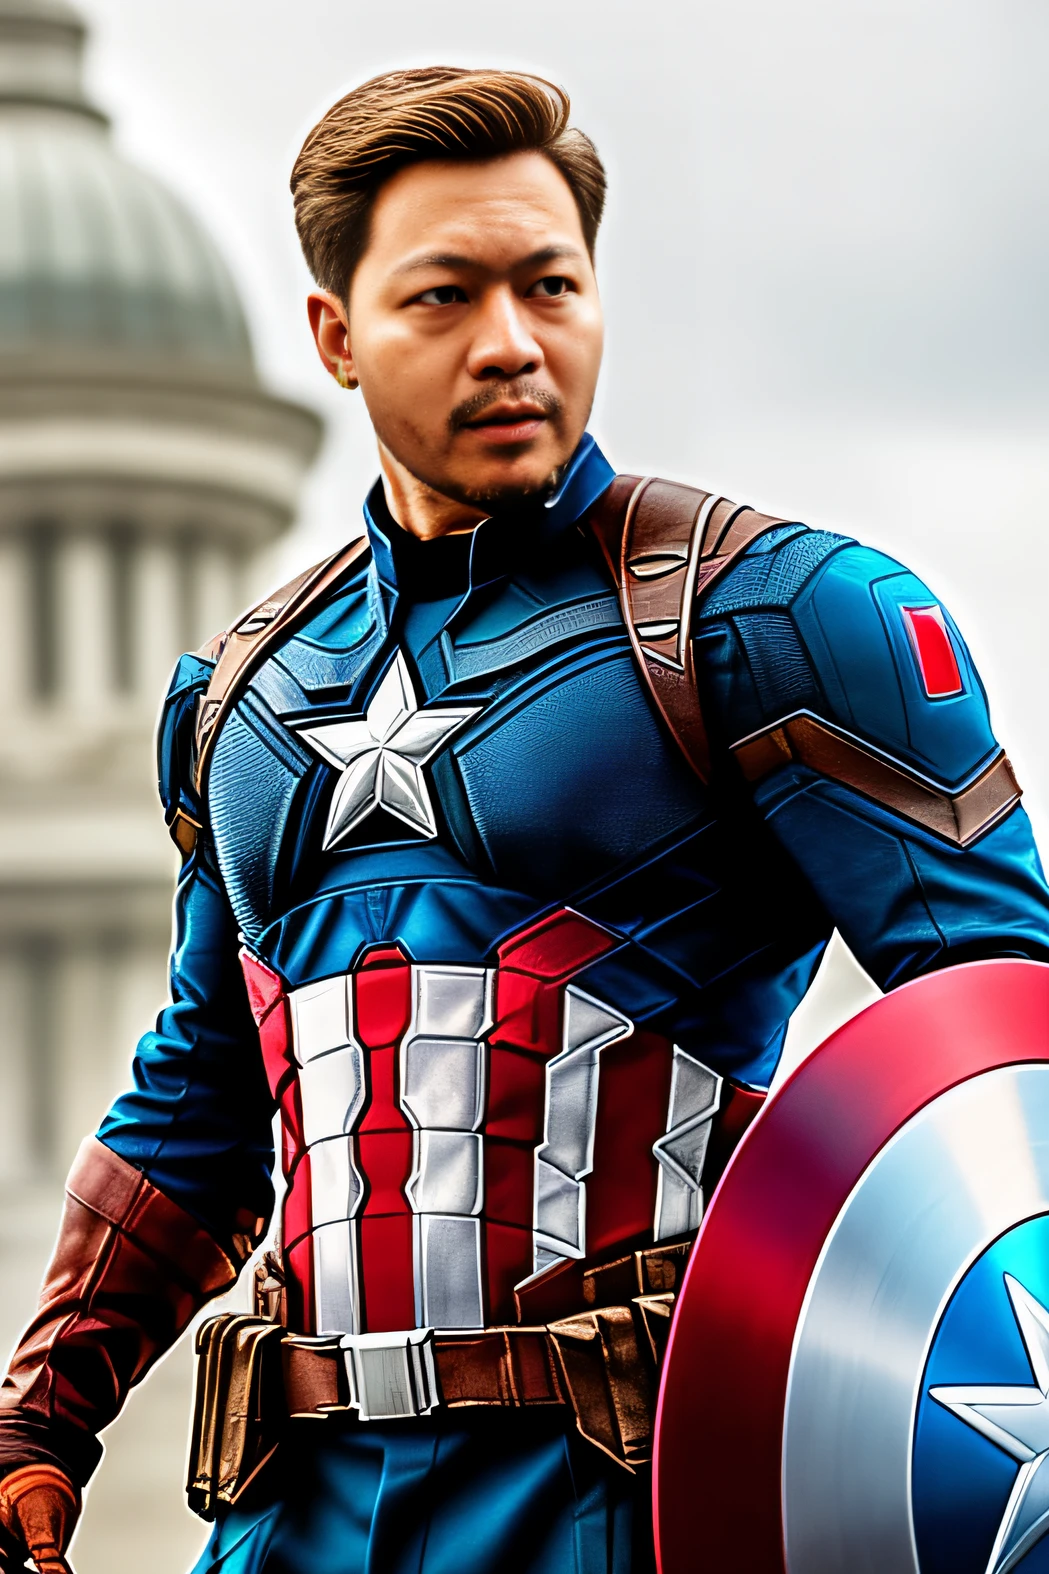 Foto muy detallada de un hombre con armadura del Capitán América，sesión de fotos modelo，8K UHD，Hiperdetalle，Fotografía cruda